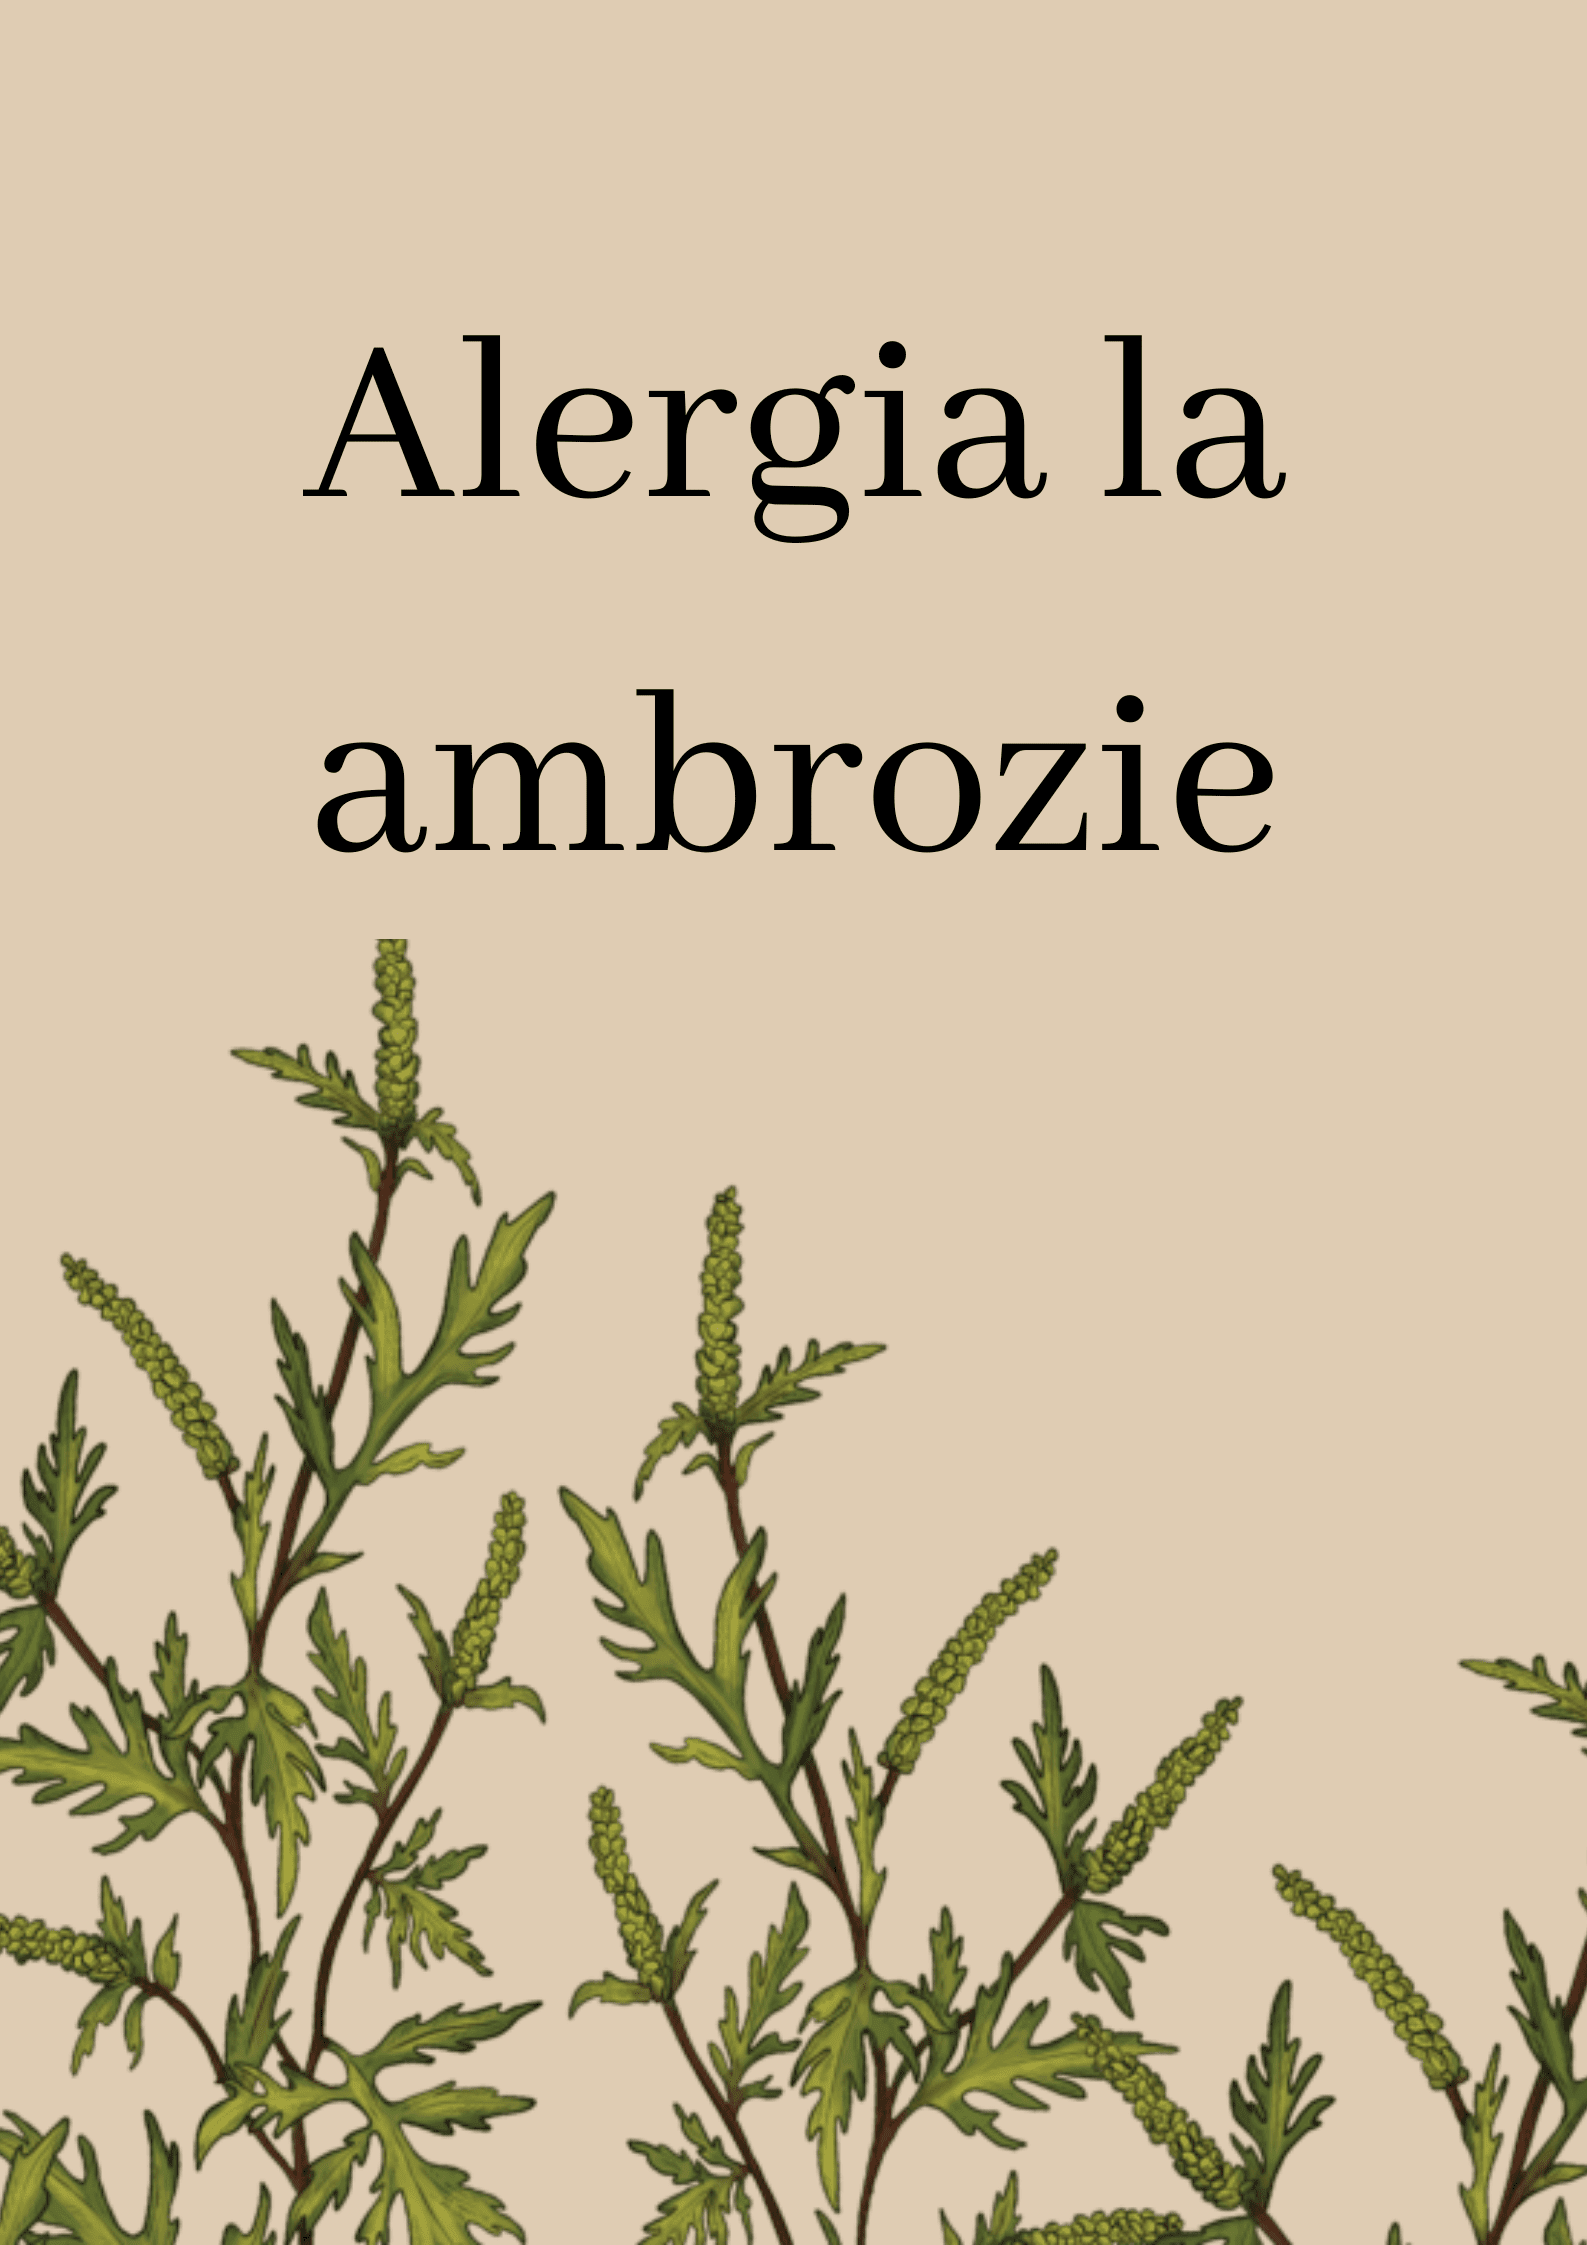 alergie ambrozie